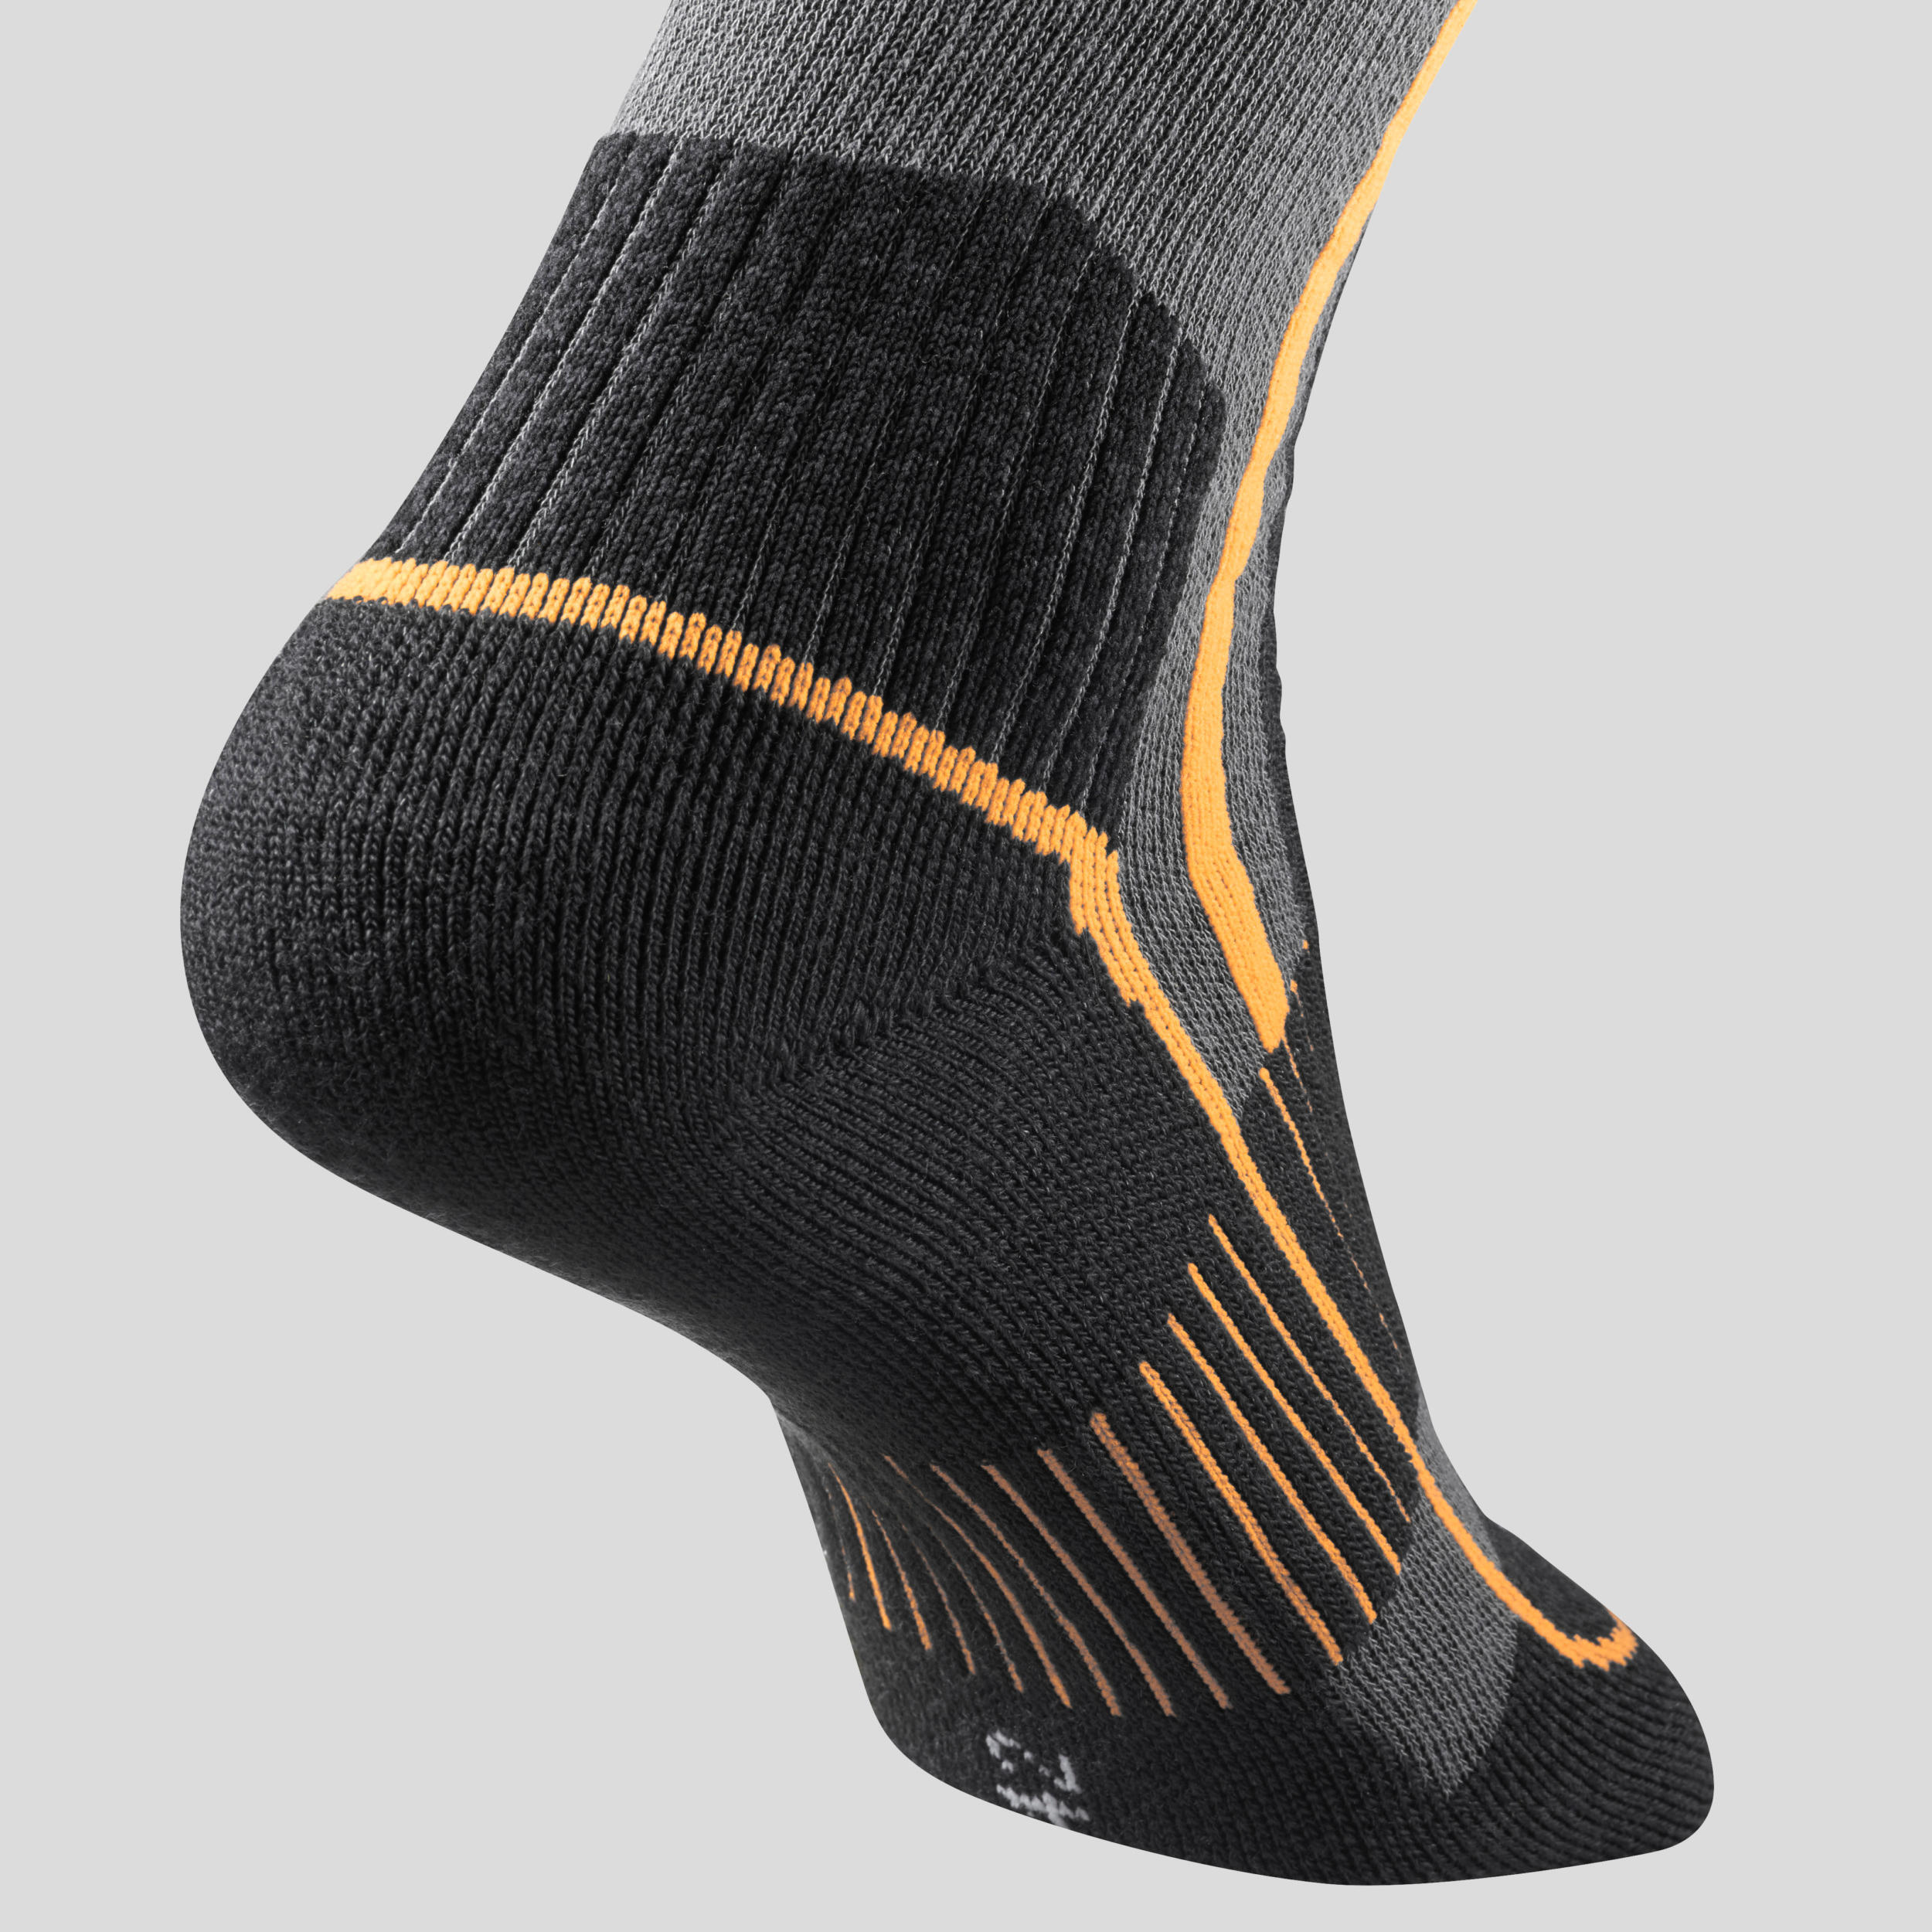 Warm Hiking Socks - SH500 MOUNTAIN MID - 2 Pairs 4/6